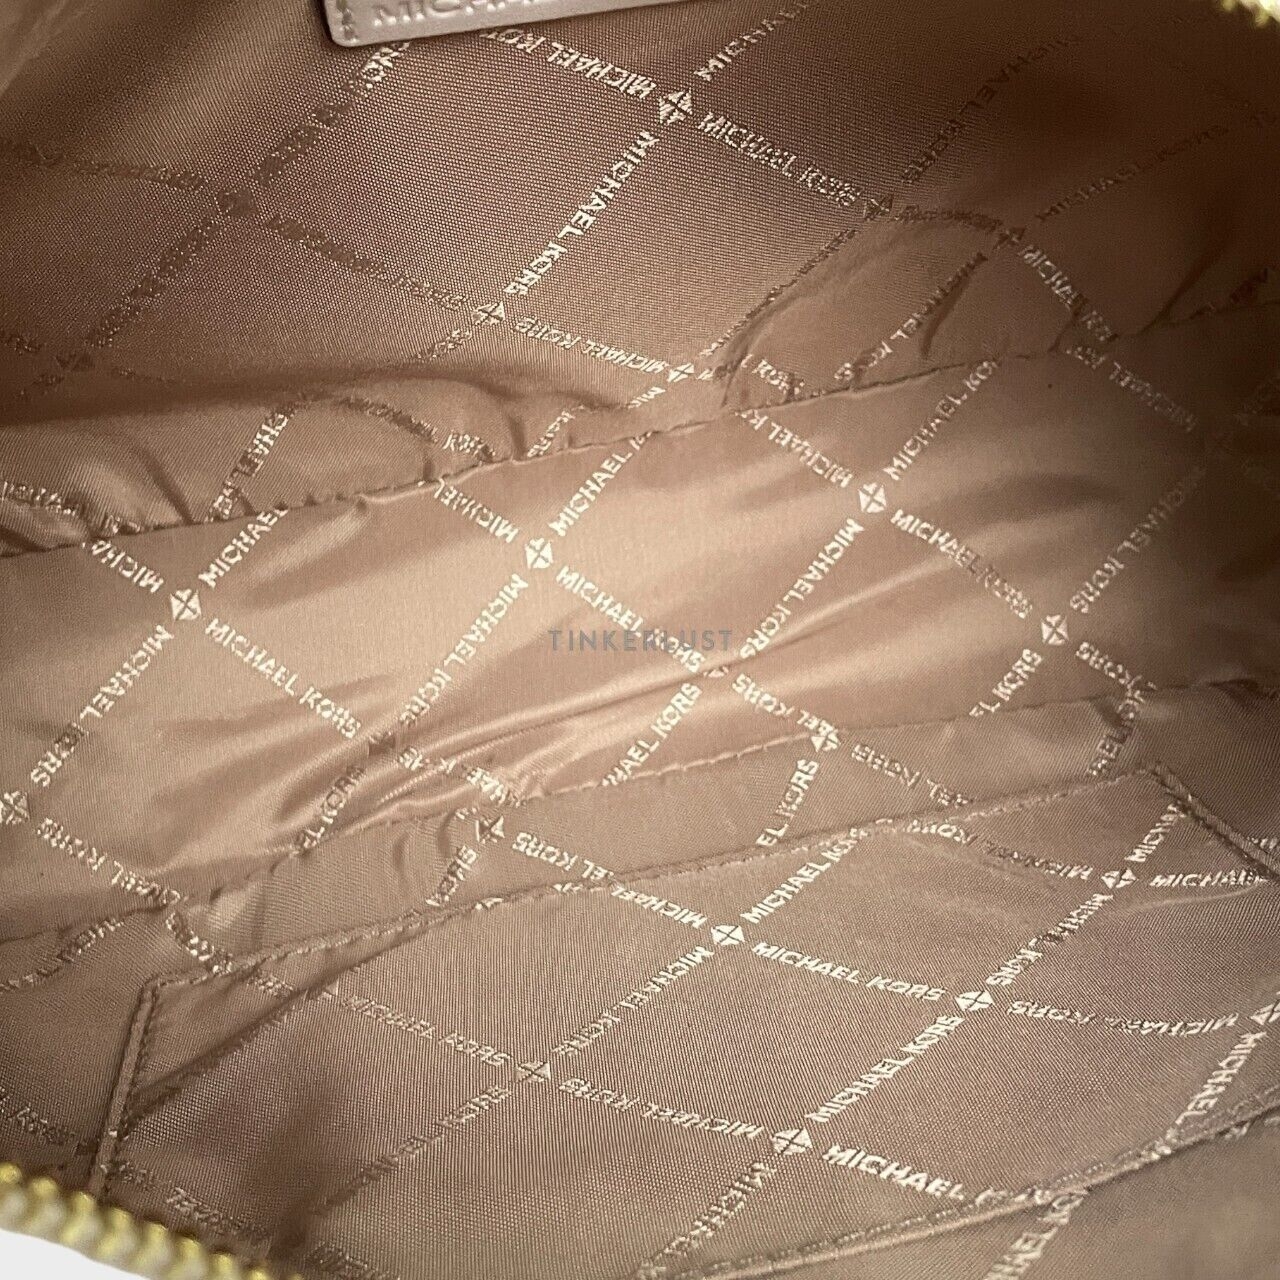 Michael Kors 35S2G4W3B Signature Cora Large Zip Pouchette Light Cream Vanilla Shoulder Bag